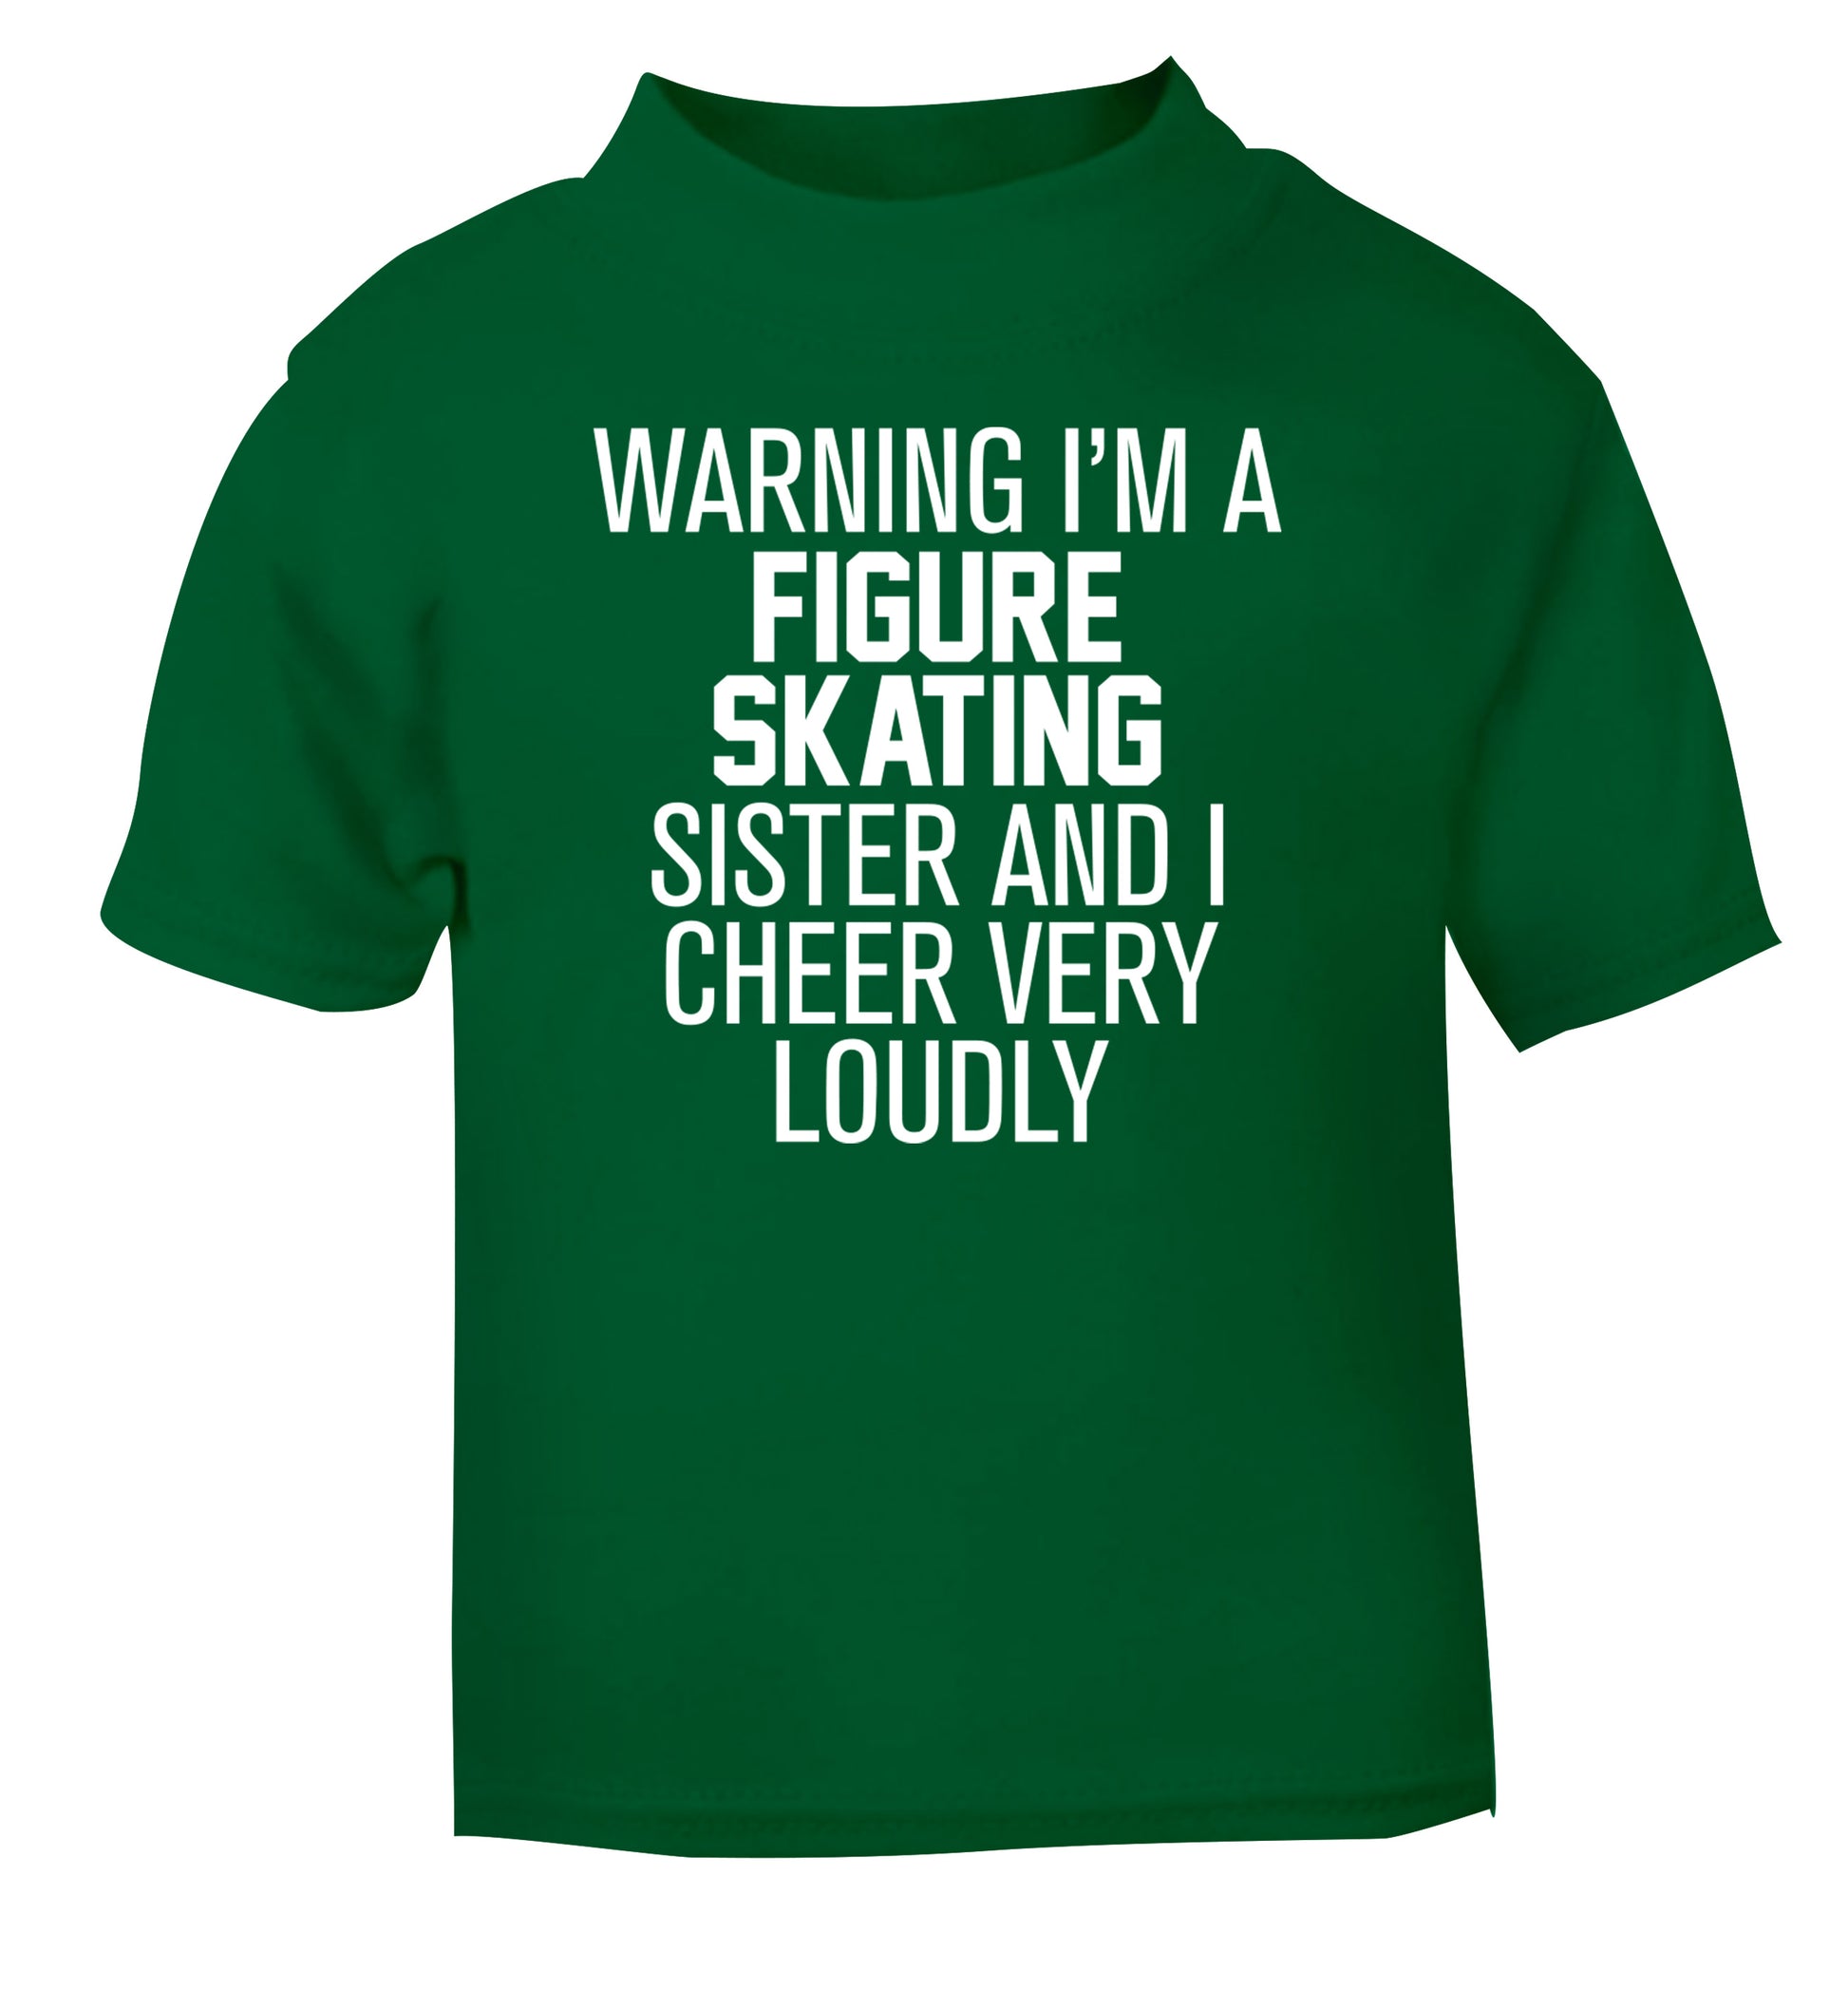 Warning I'm a figure skating sister and I cheer very loudly green Baby Toddler Tshirt 2 Years